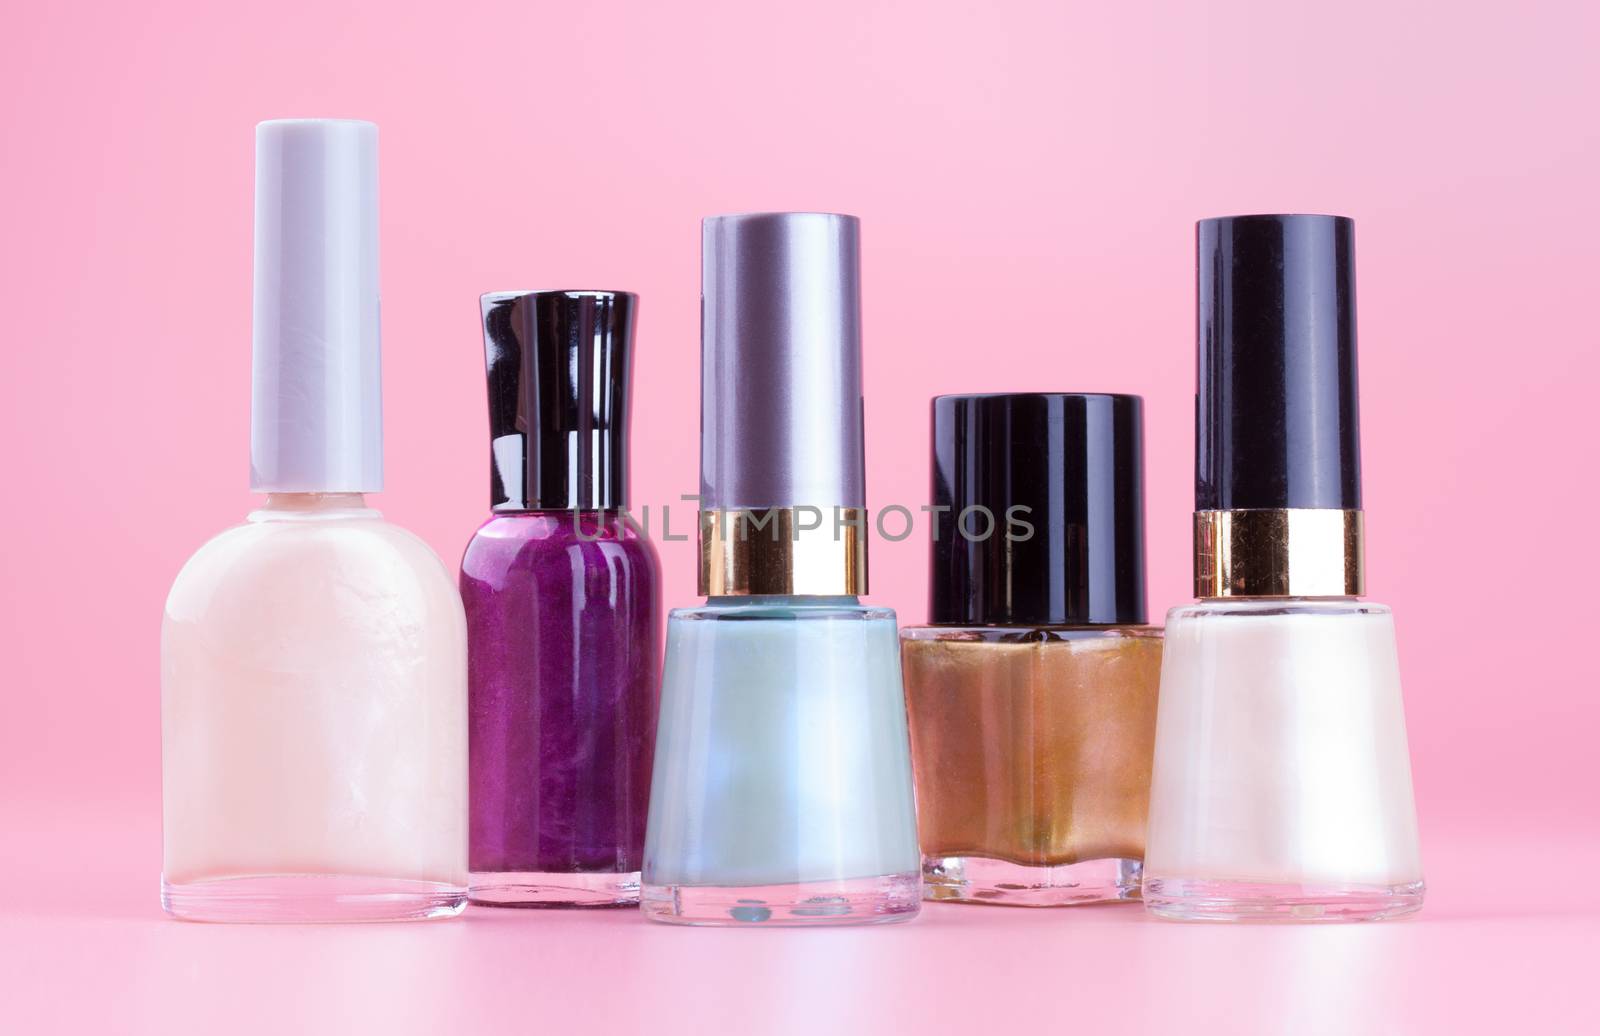 Variety of nail polish bottles by lanalanglois